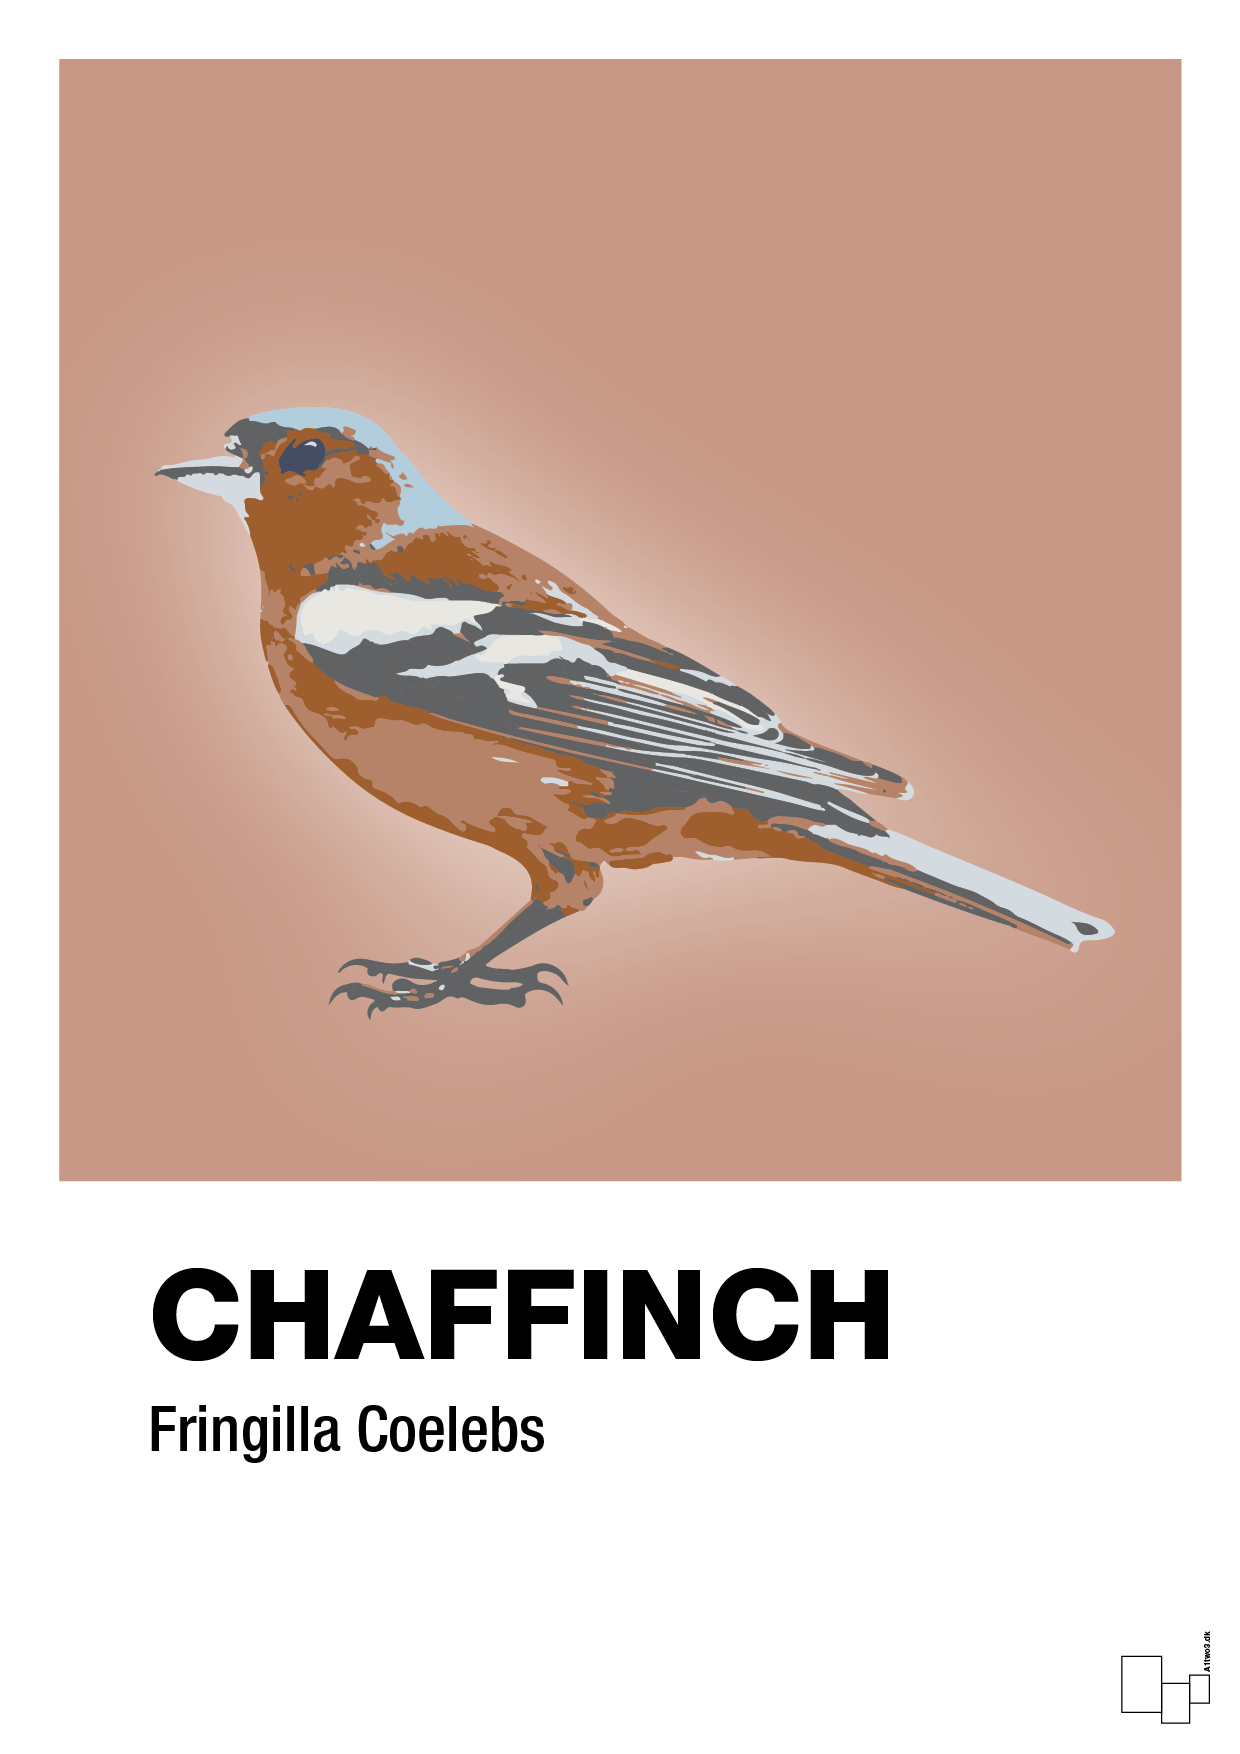 chaffinch - Plakat med Videnskab i Powder